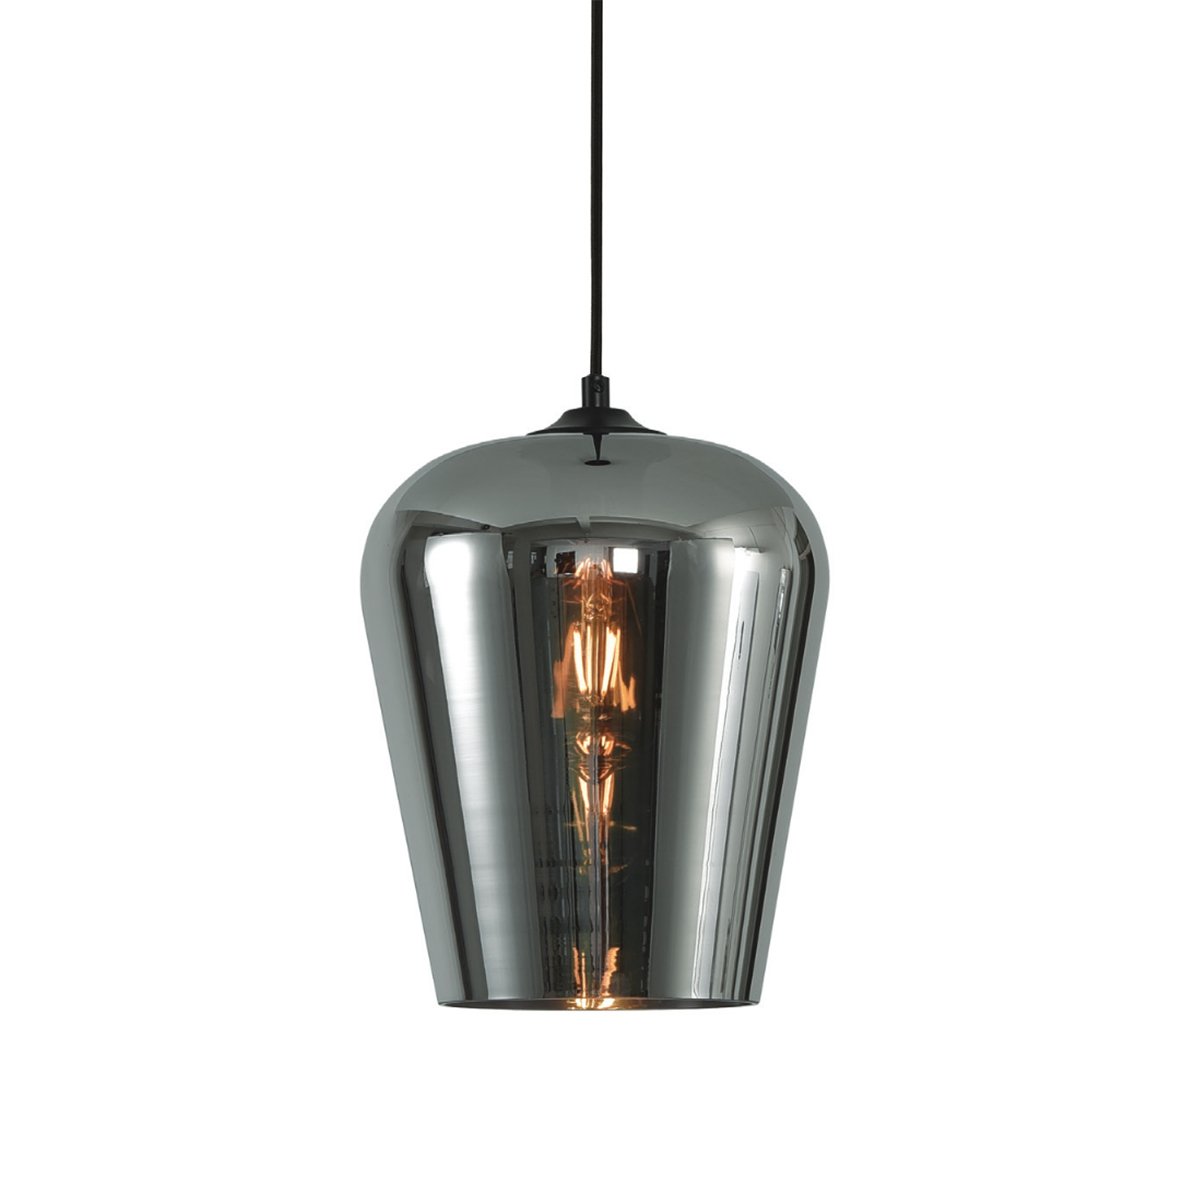 Plafondlampen Hanglamp modern metaal glas Alghero - Ø 23 cm